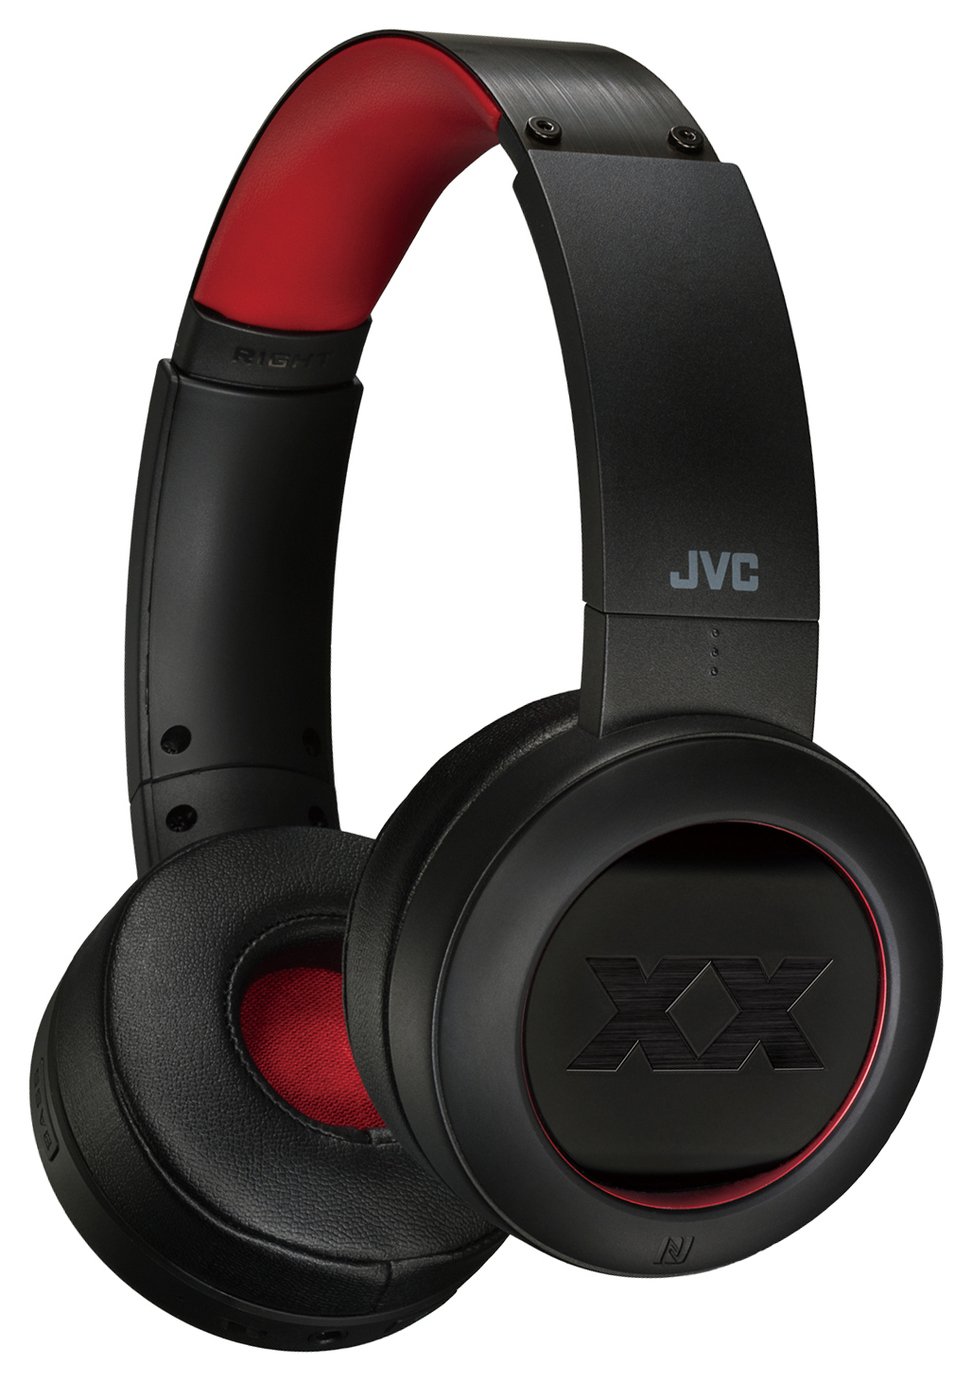 JVC XX On-Ear Bluetooth Headphones review